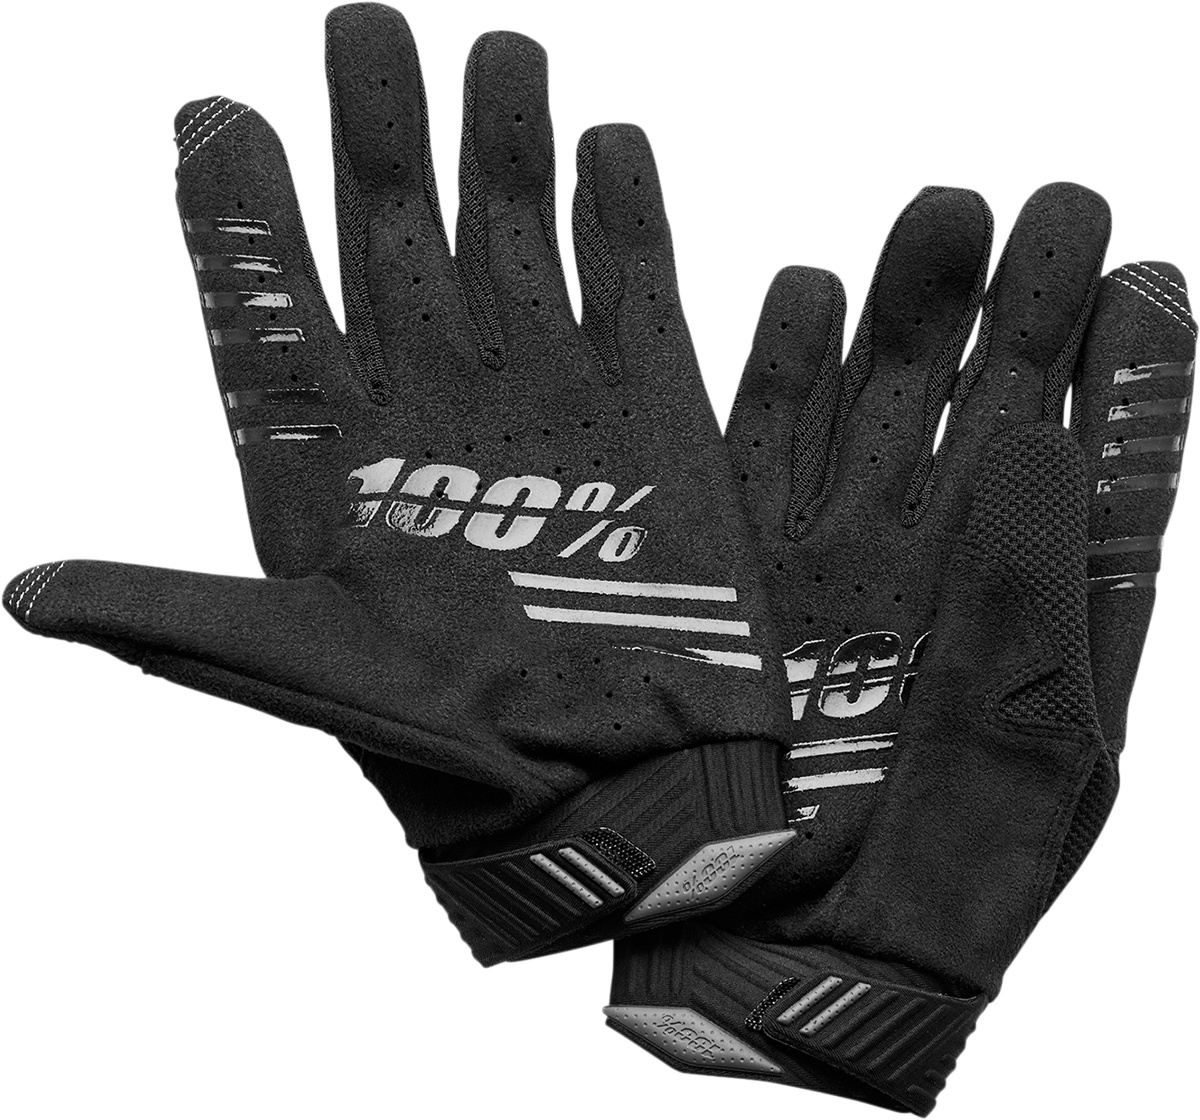 100% R-Core Gloves - Black - XL 10027-00003